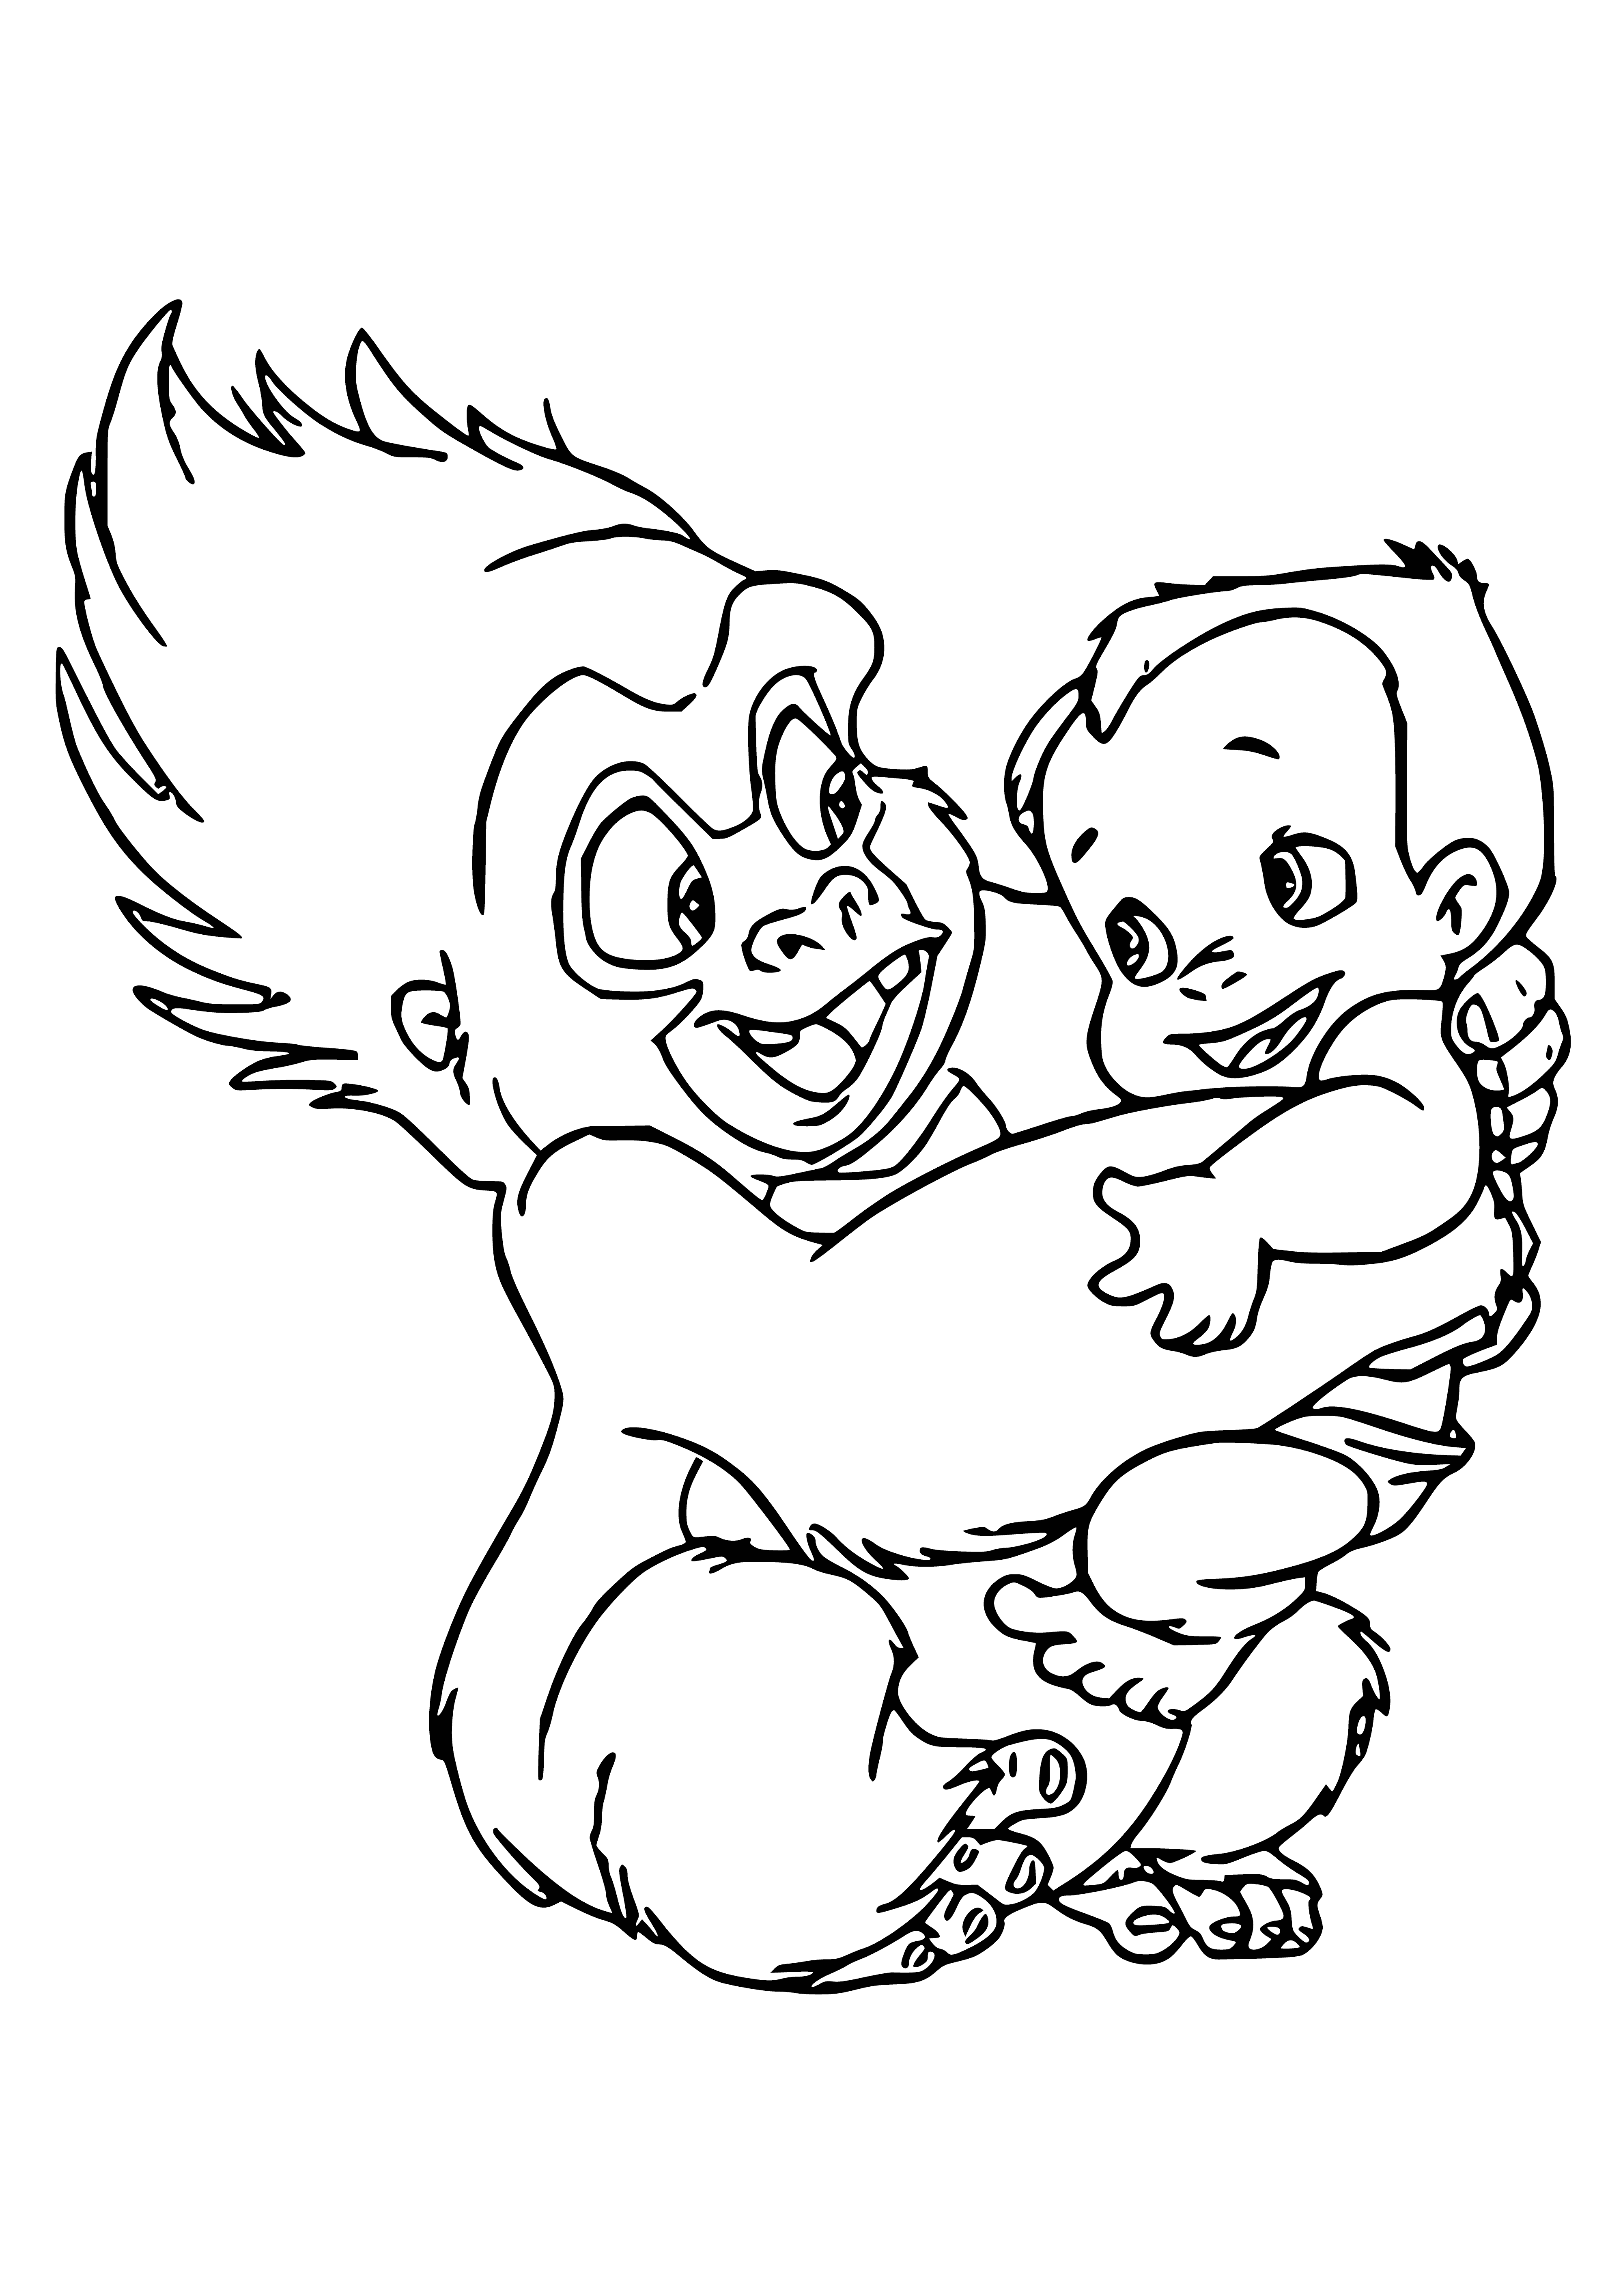 Gorilla Turk and baby Tarzan coloring page